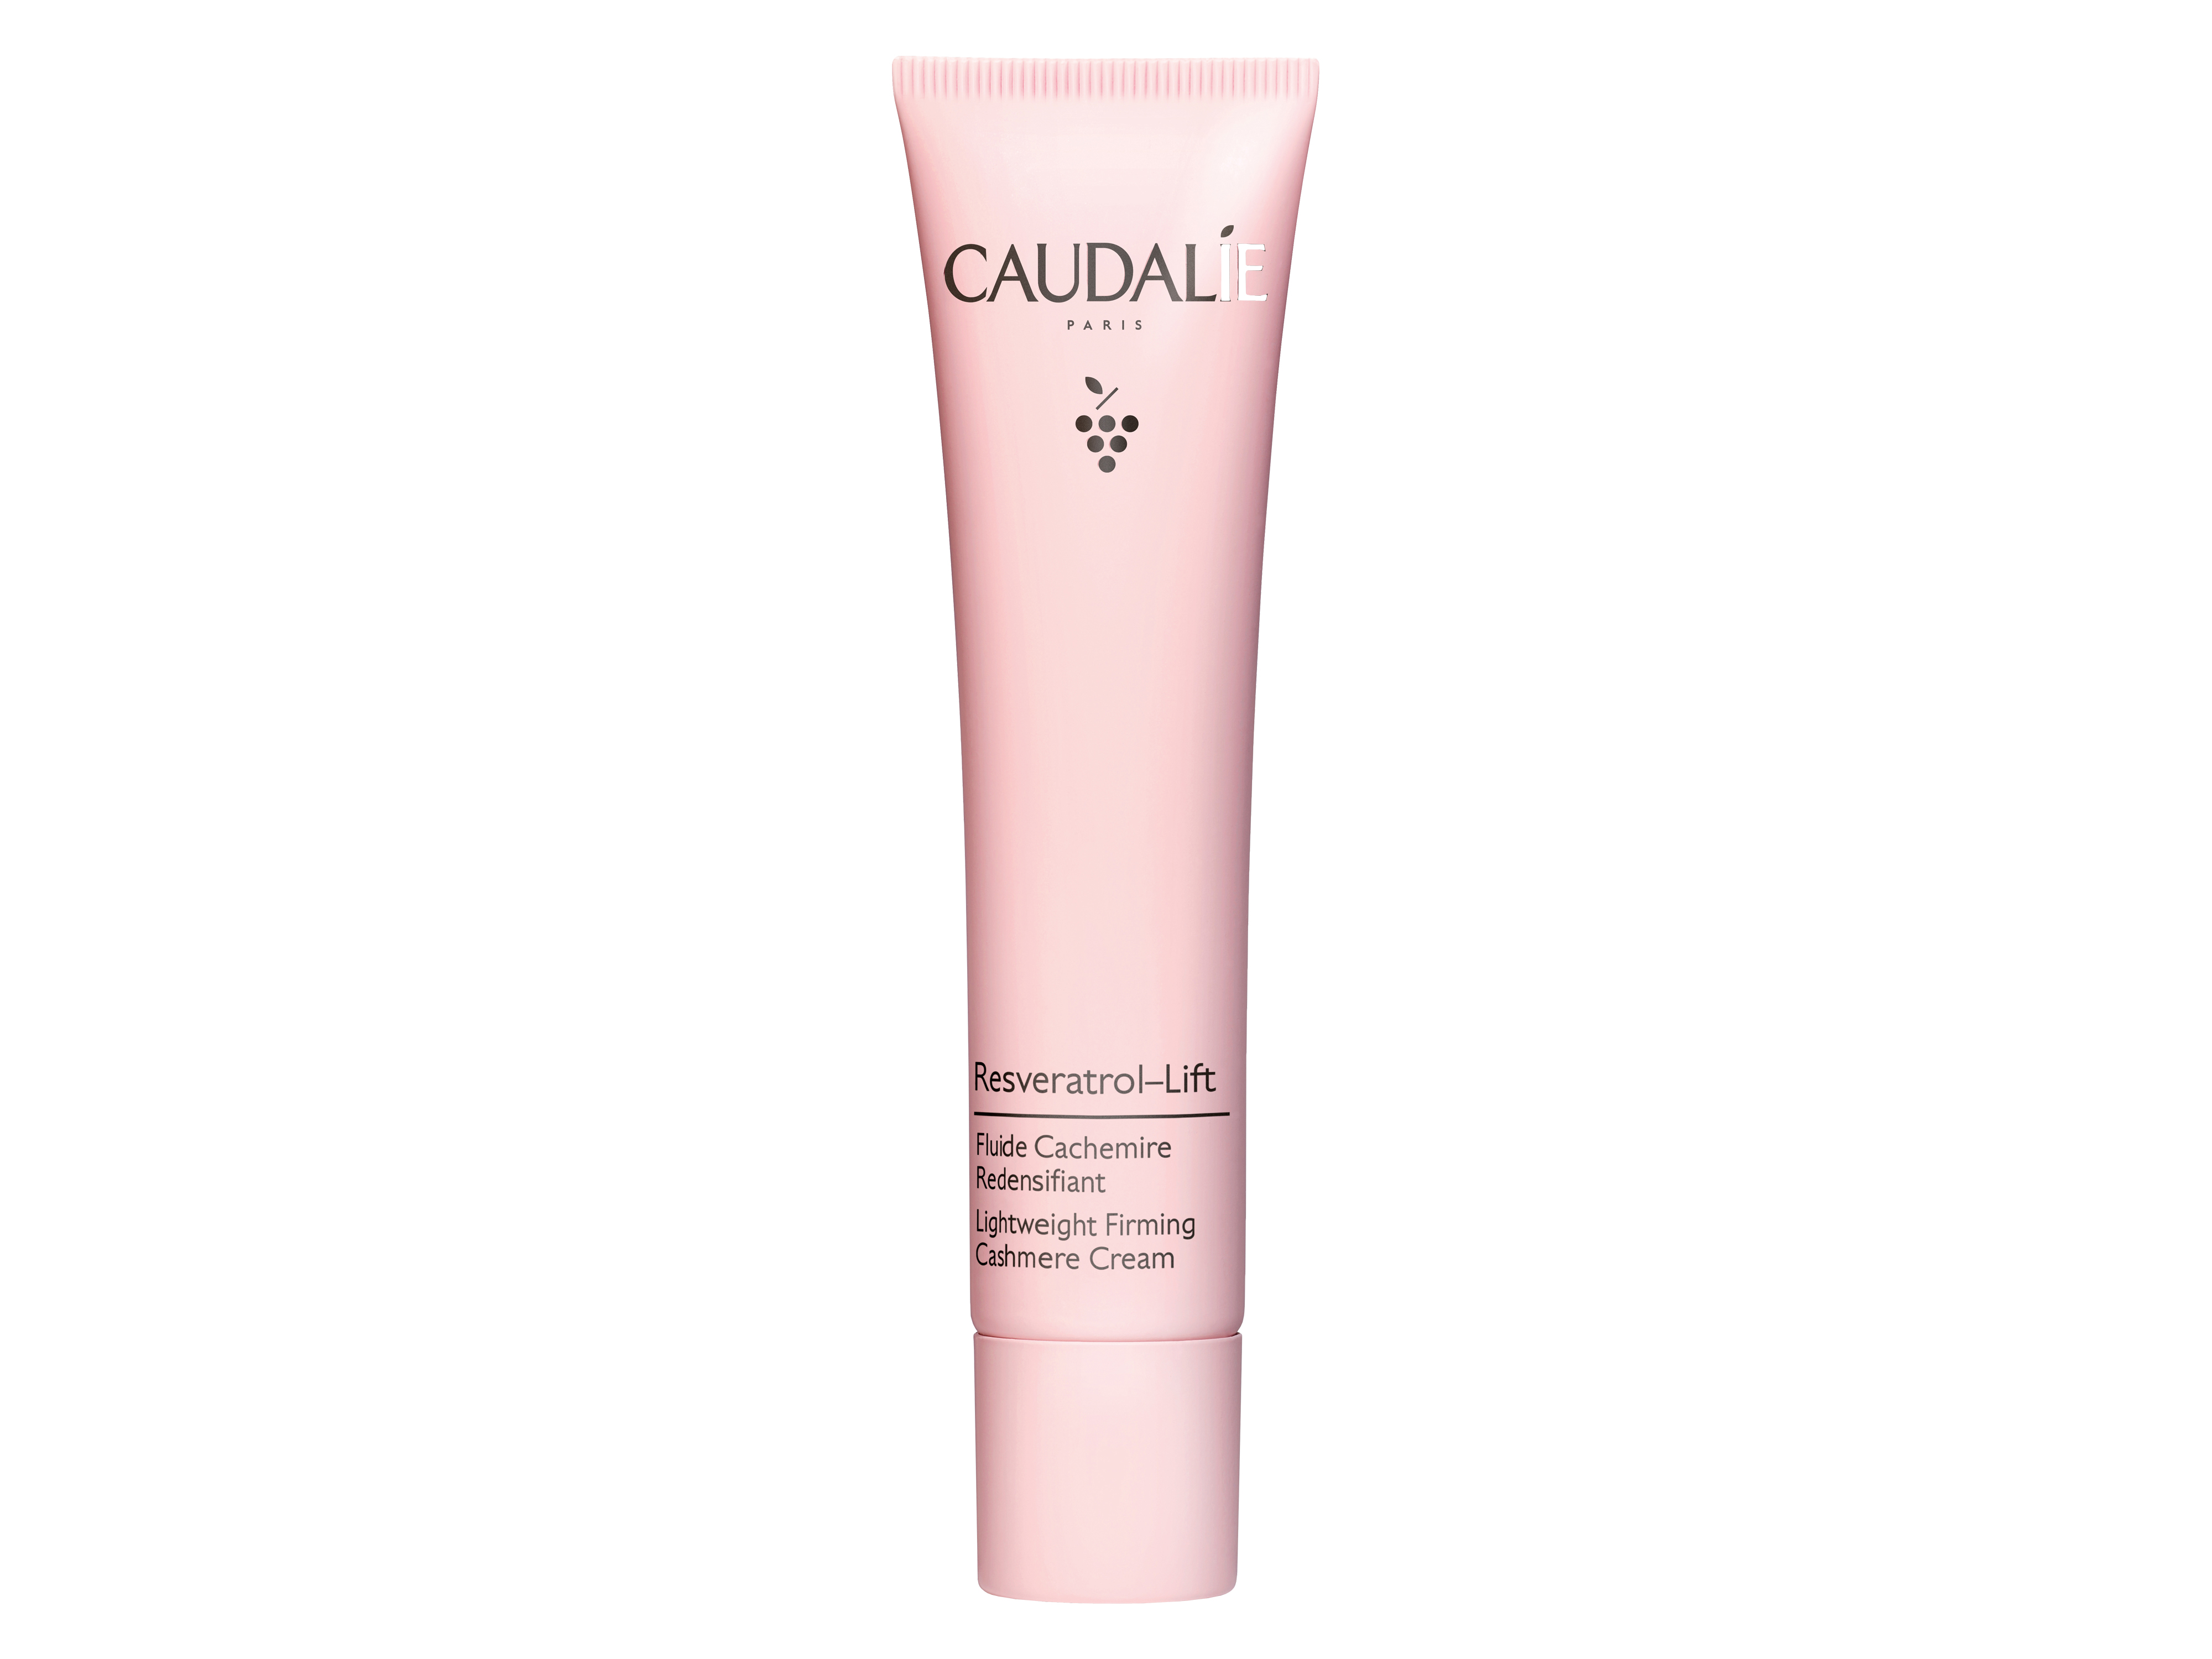 Caudalie Resveratrol-Lift Lightweight Firming Cashmere Cream, 40 ml